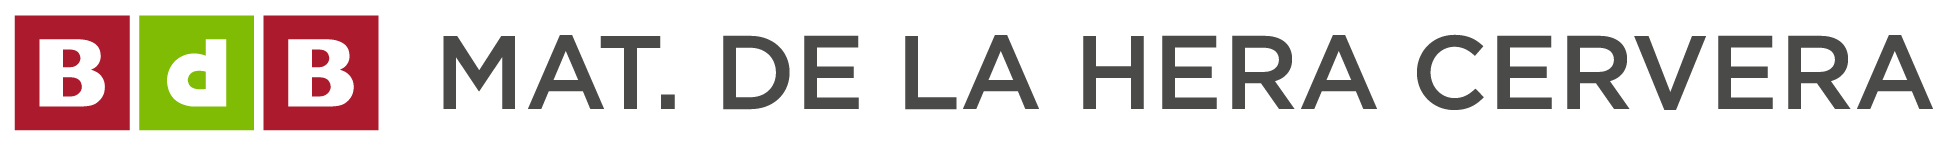 Logo Materiales De La Hera Cervera